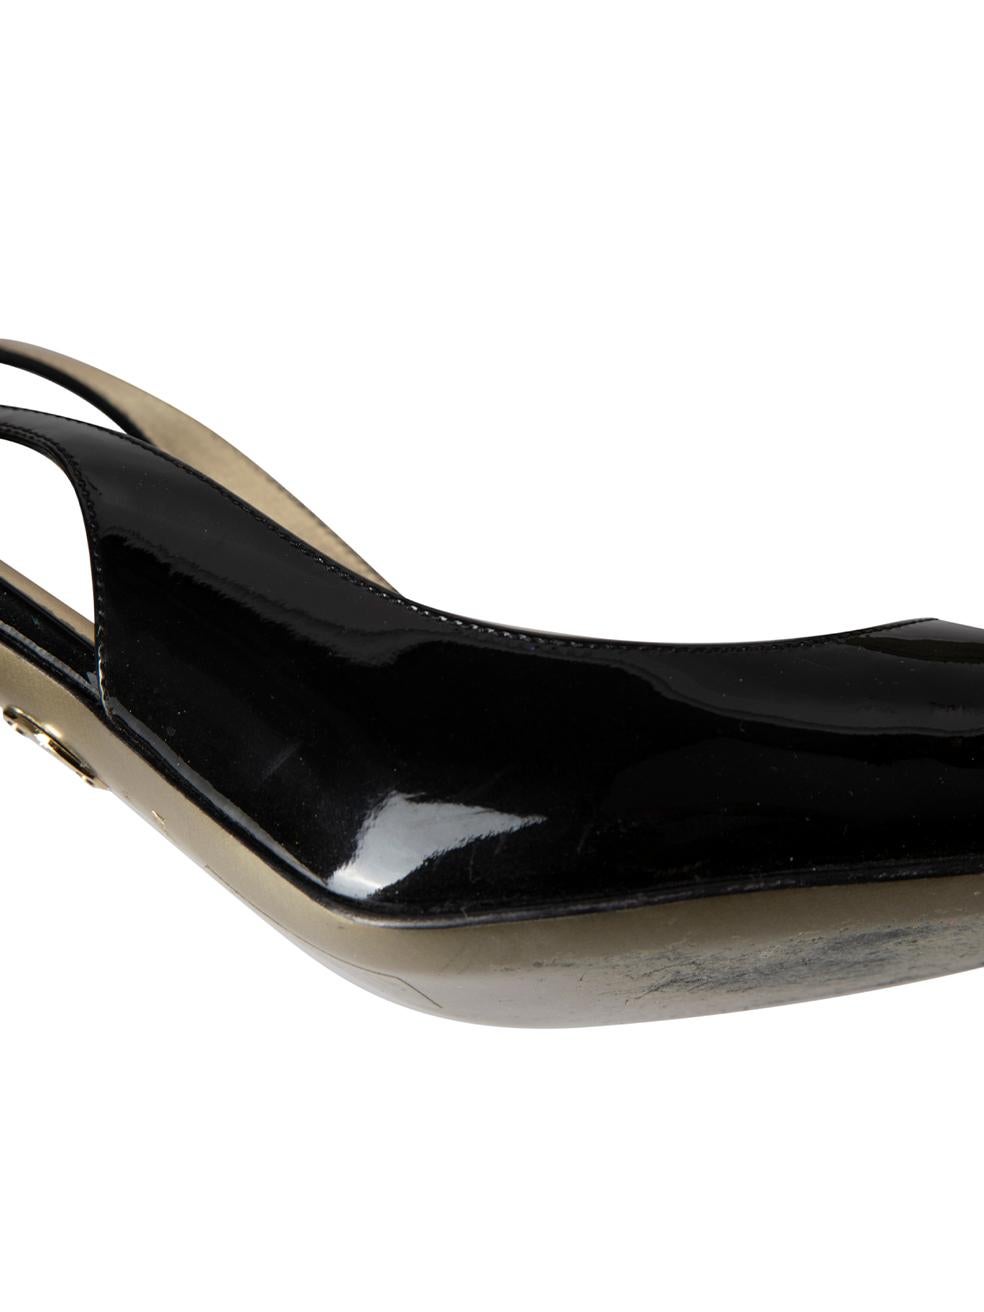 Dolce & Gabbana Women's Black Patent Leather Slingback Cut Out Heels 1